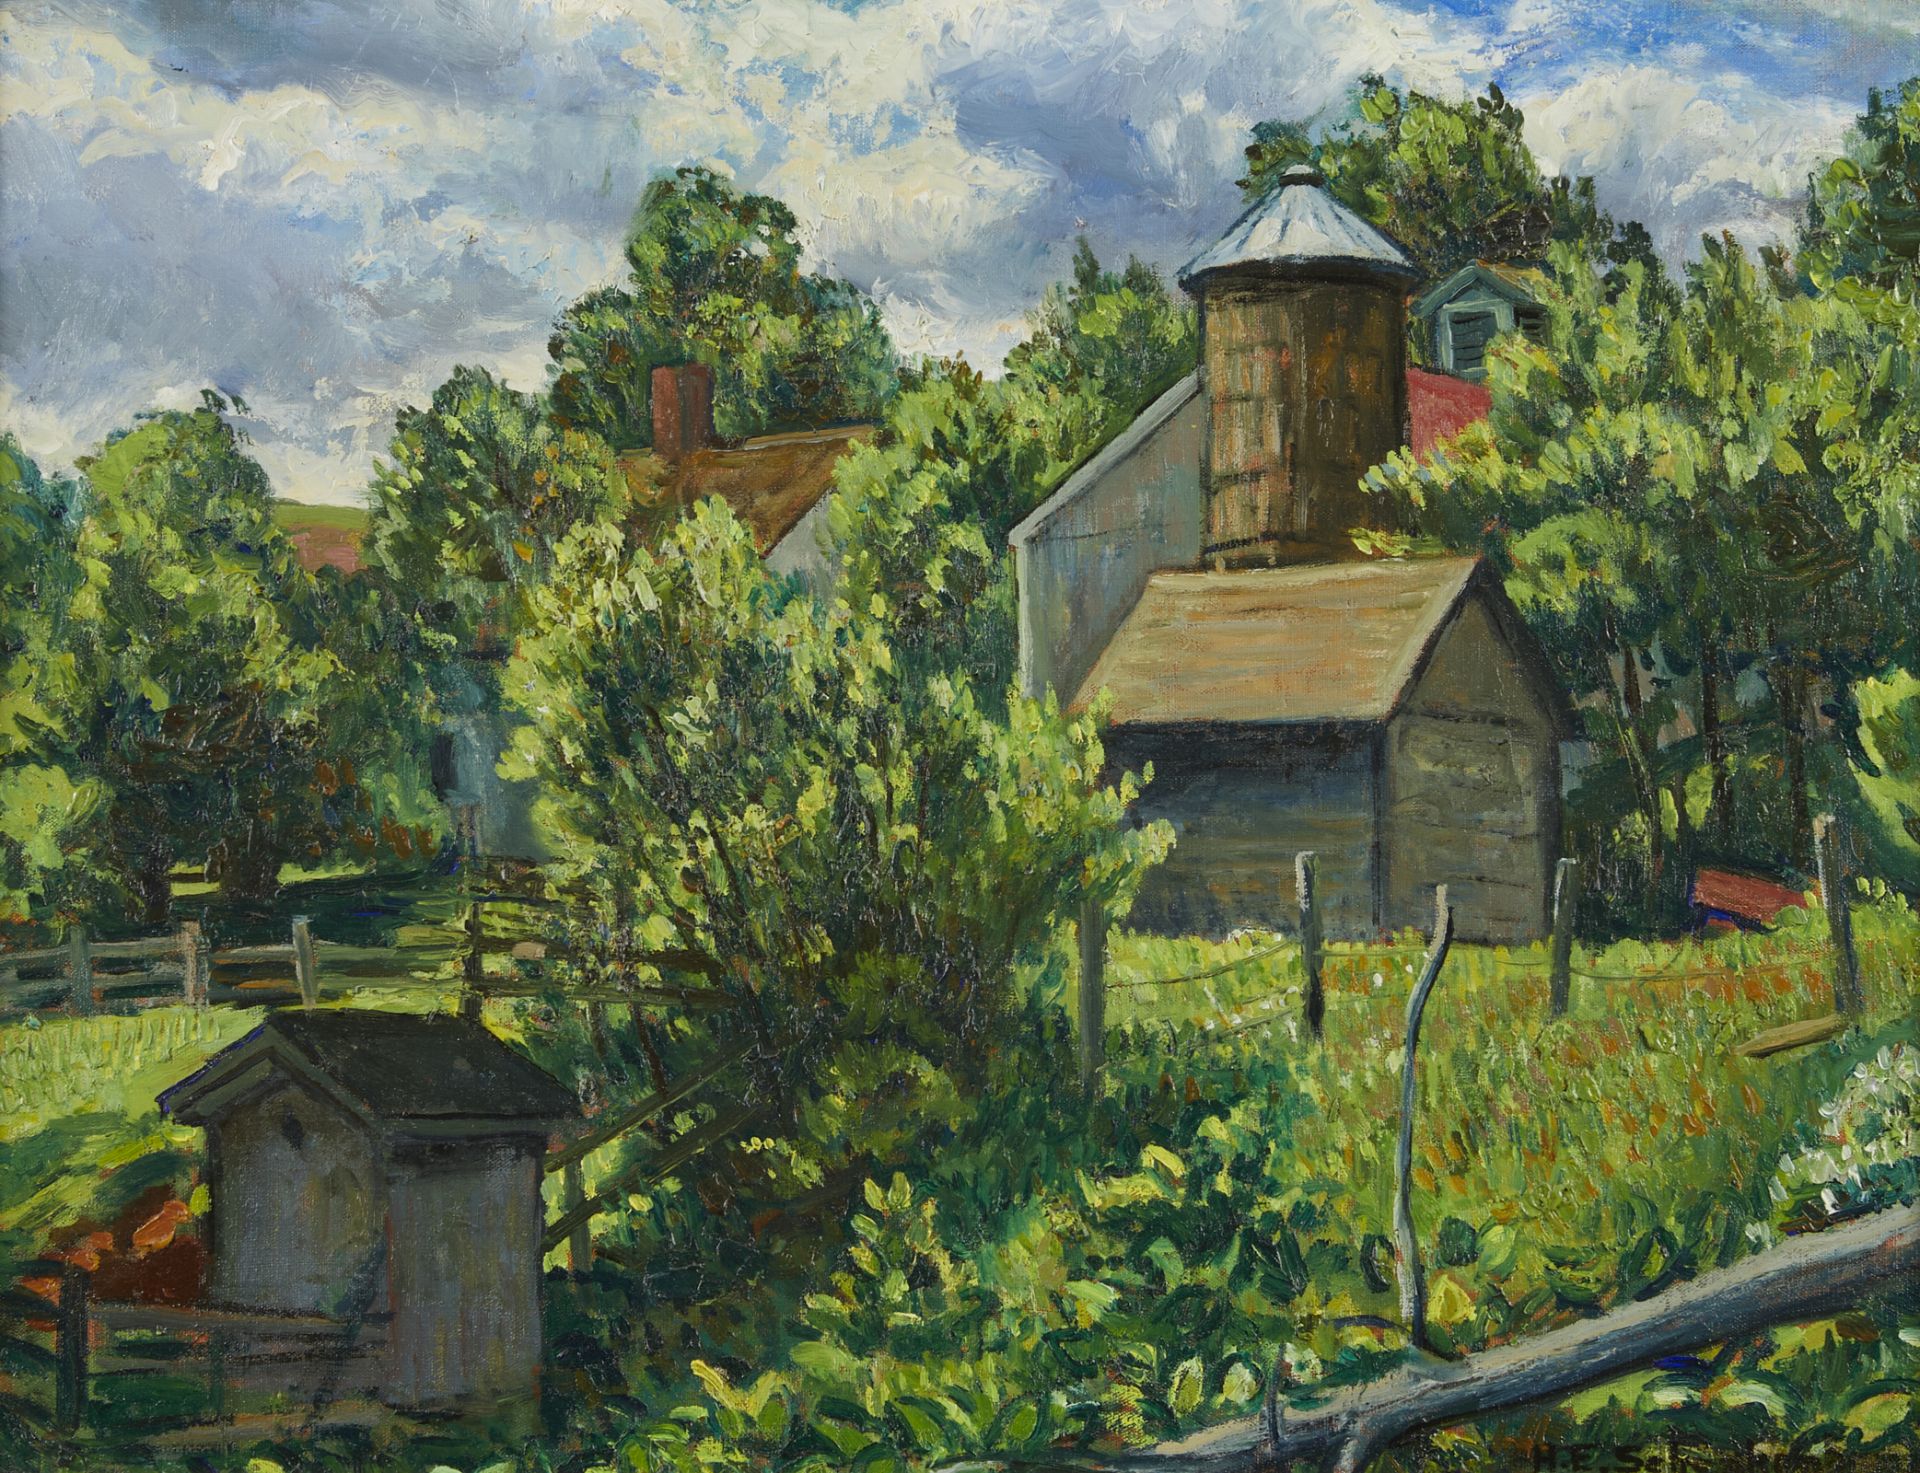 Henry Schnakenberg "Farm Buildings" Painting